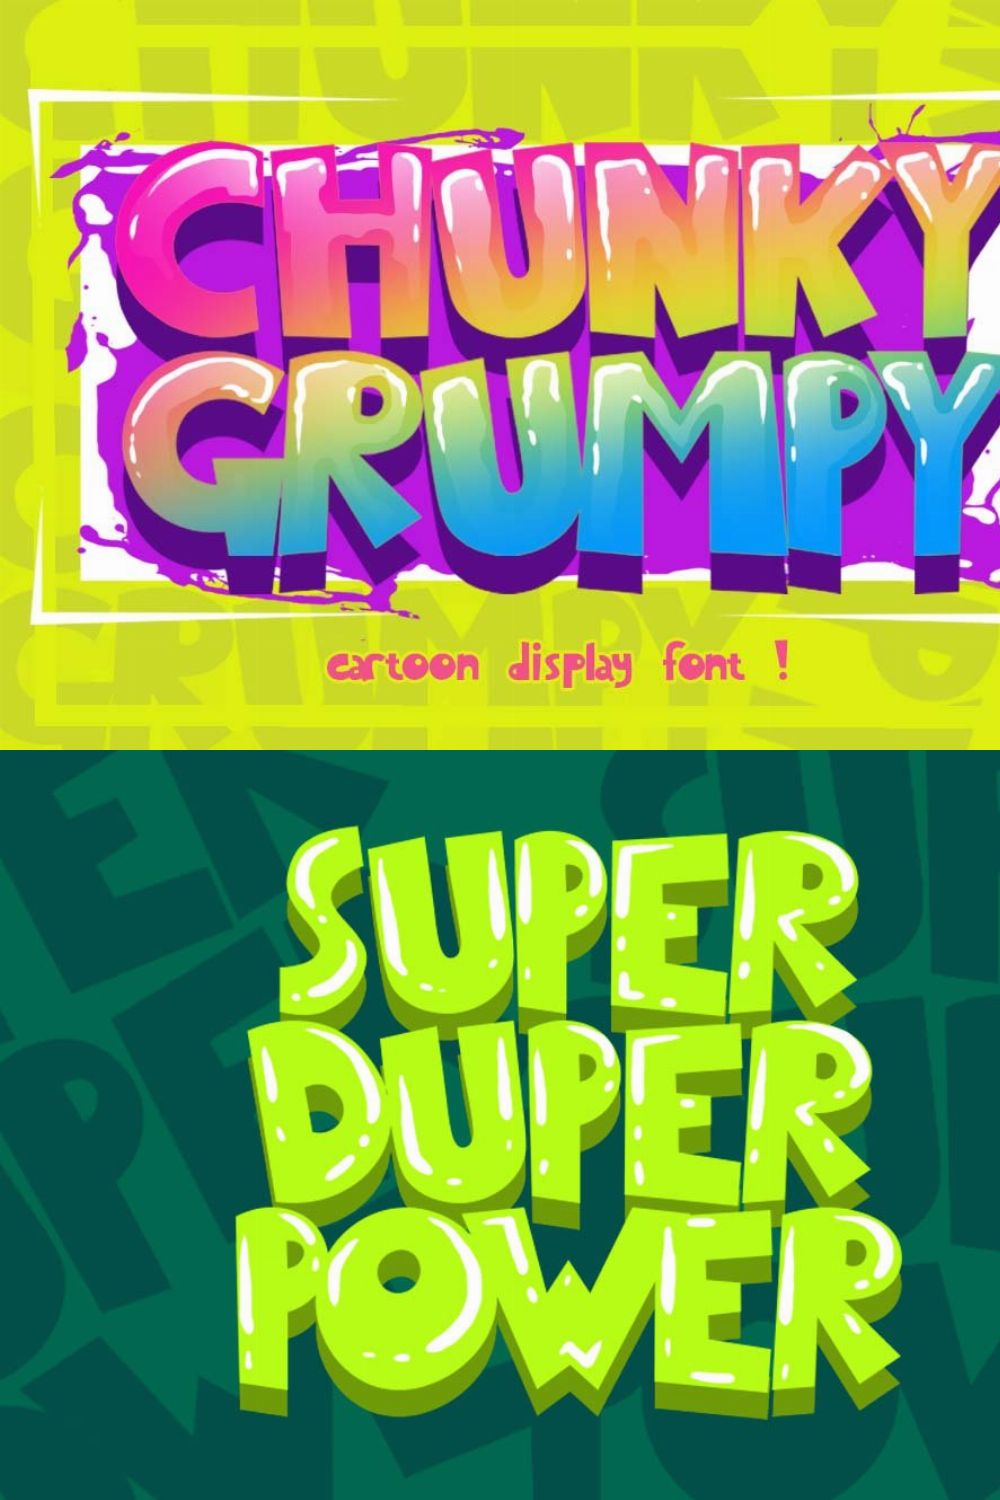 CHUNKY GRUMPY cartoon display font pinterest preview image.